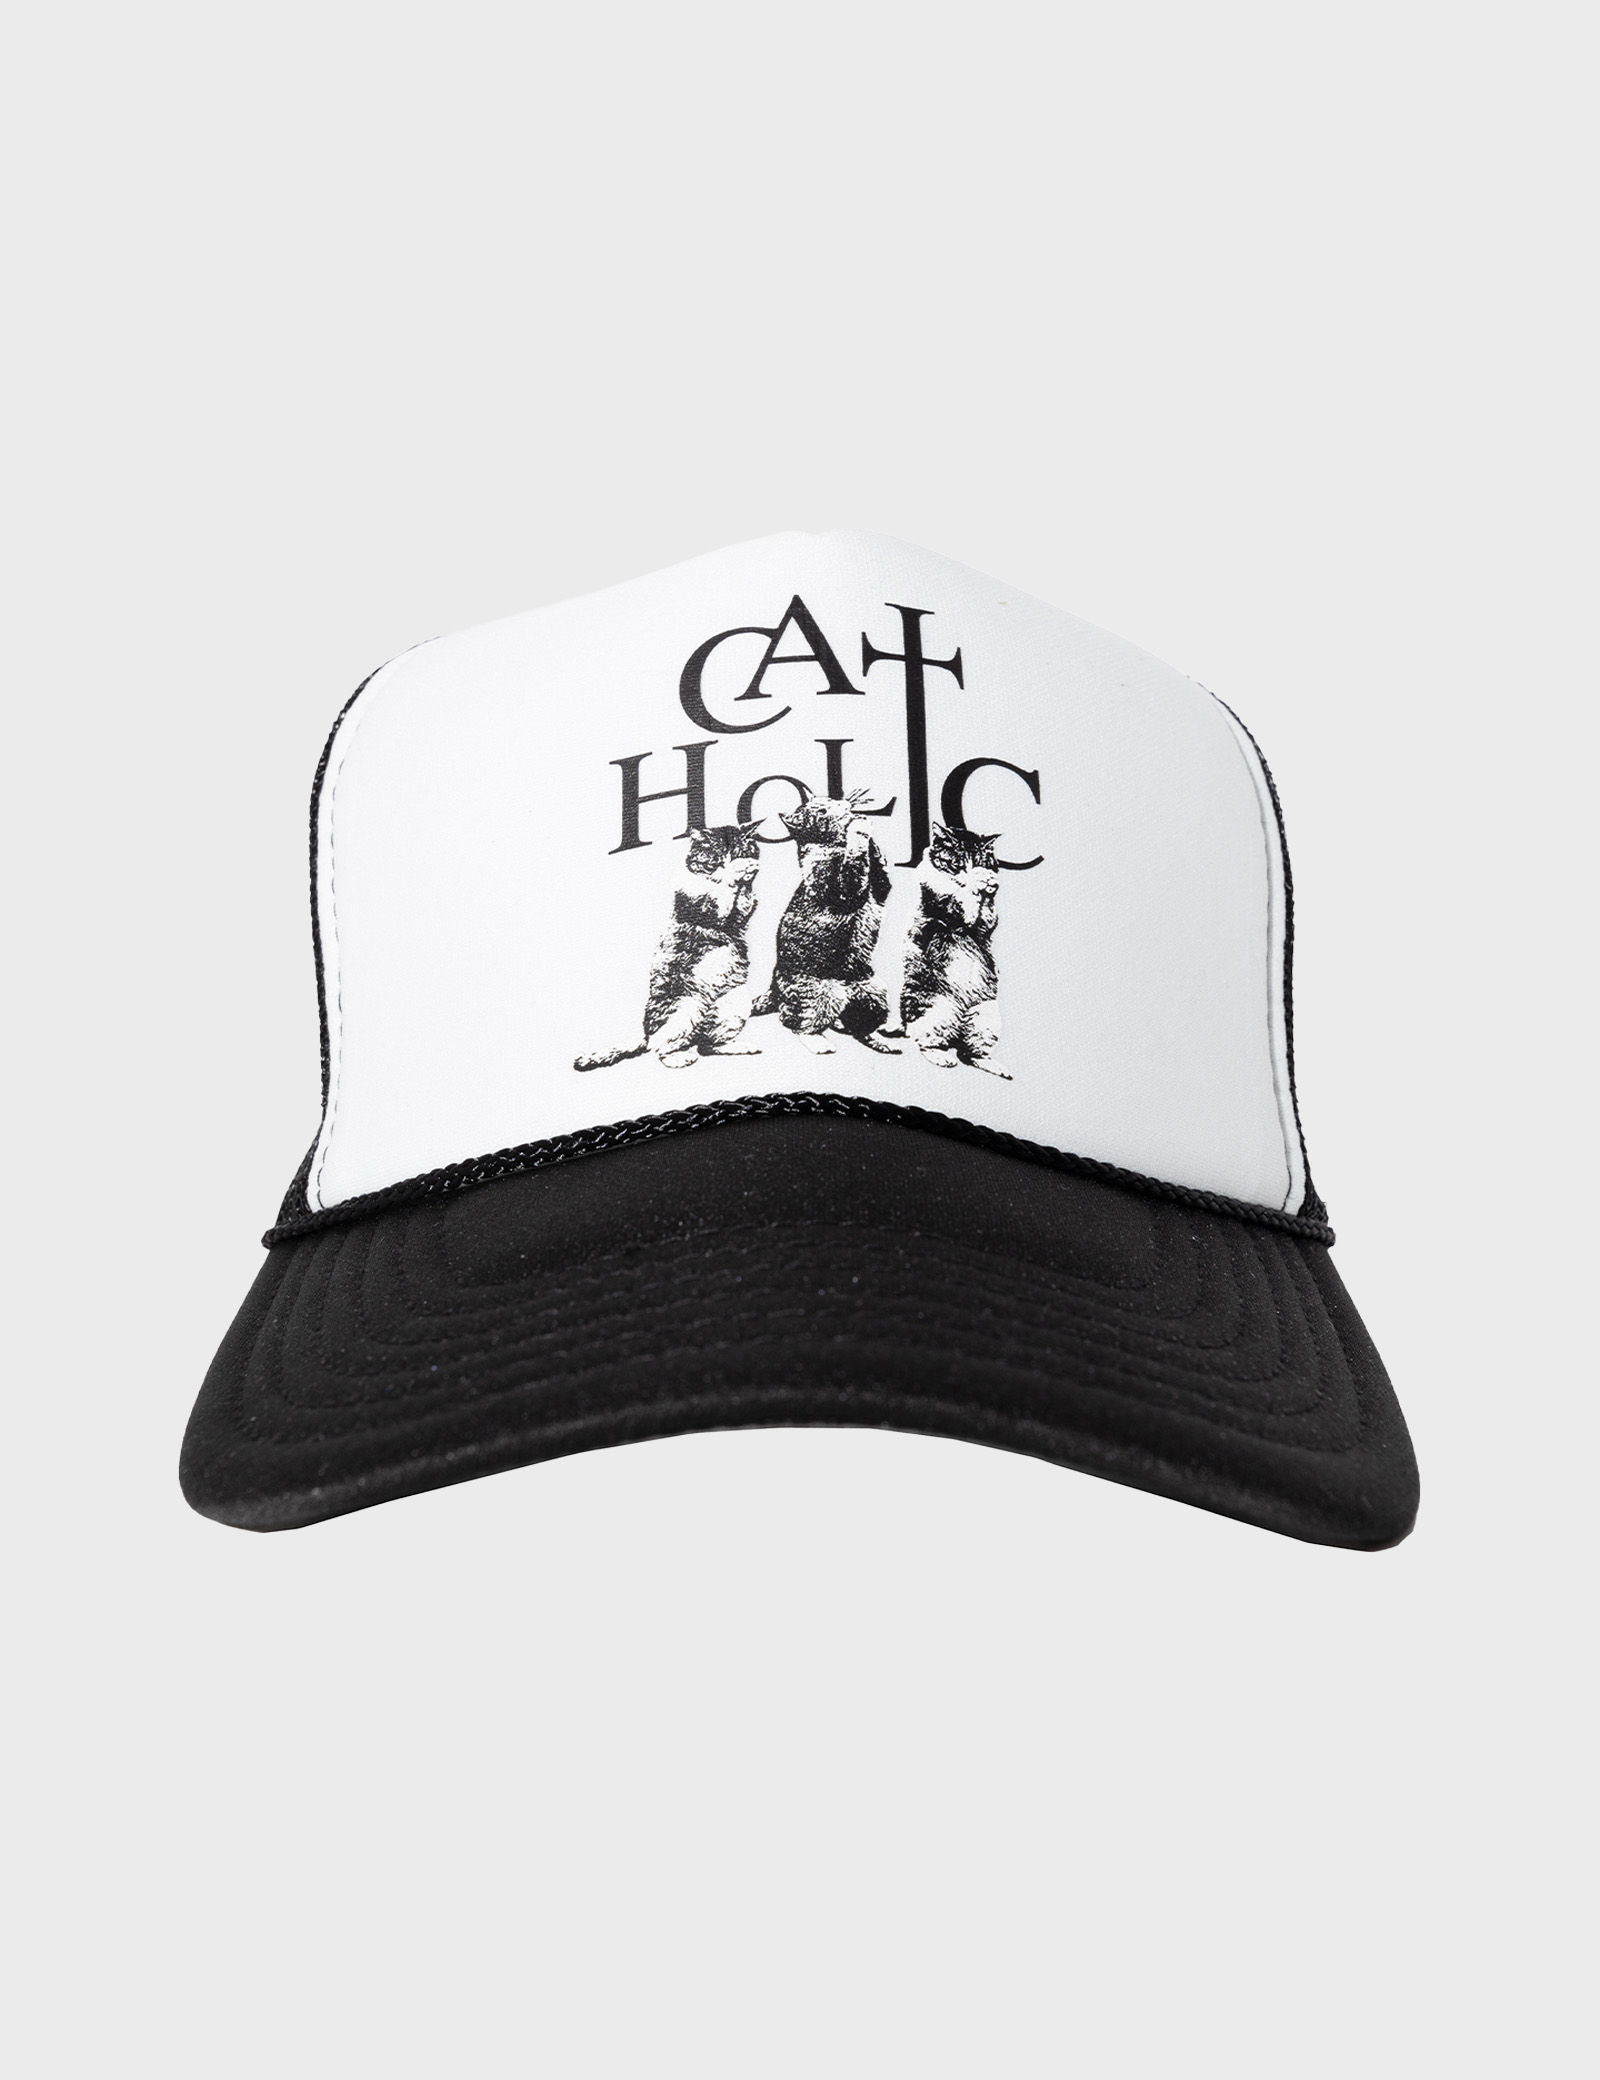 CAT HOLIC Trucker Cap